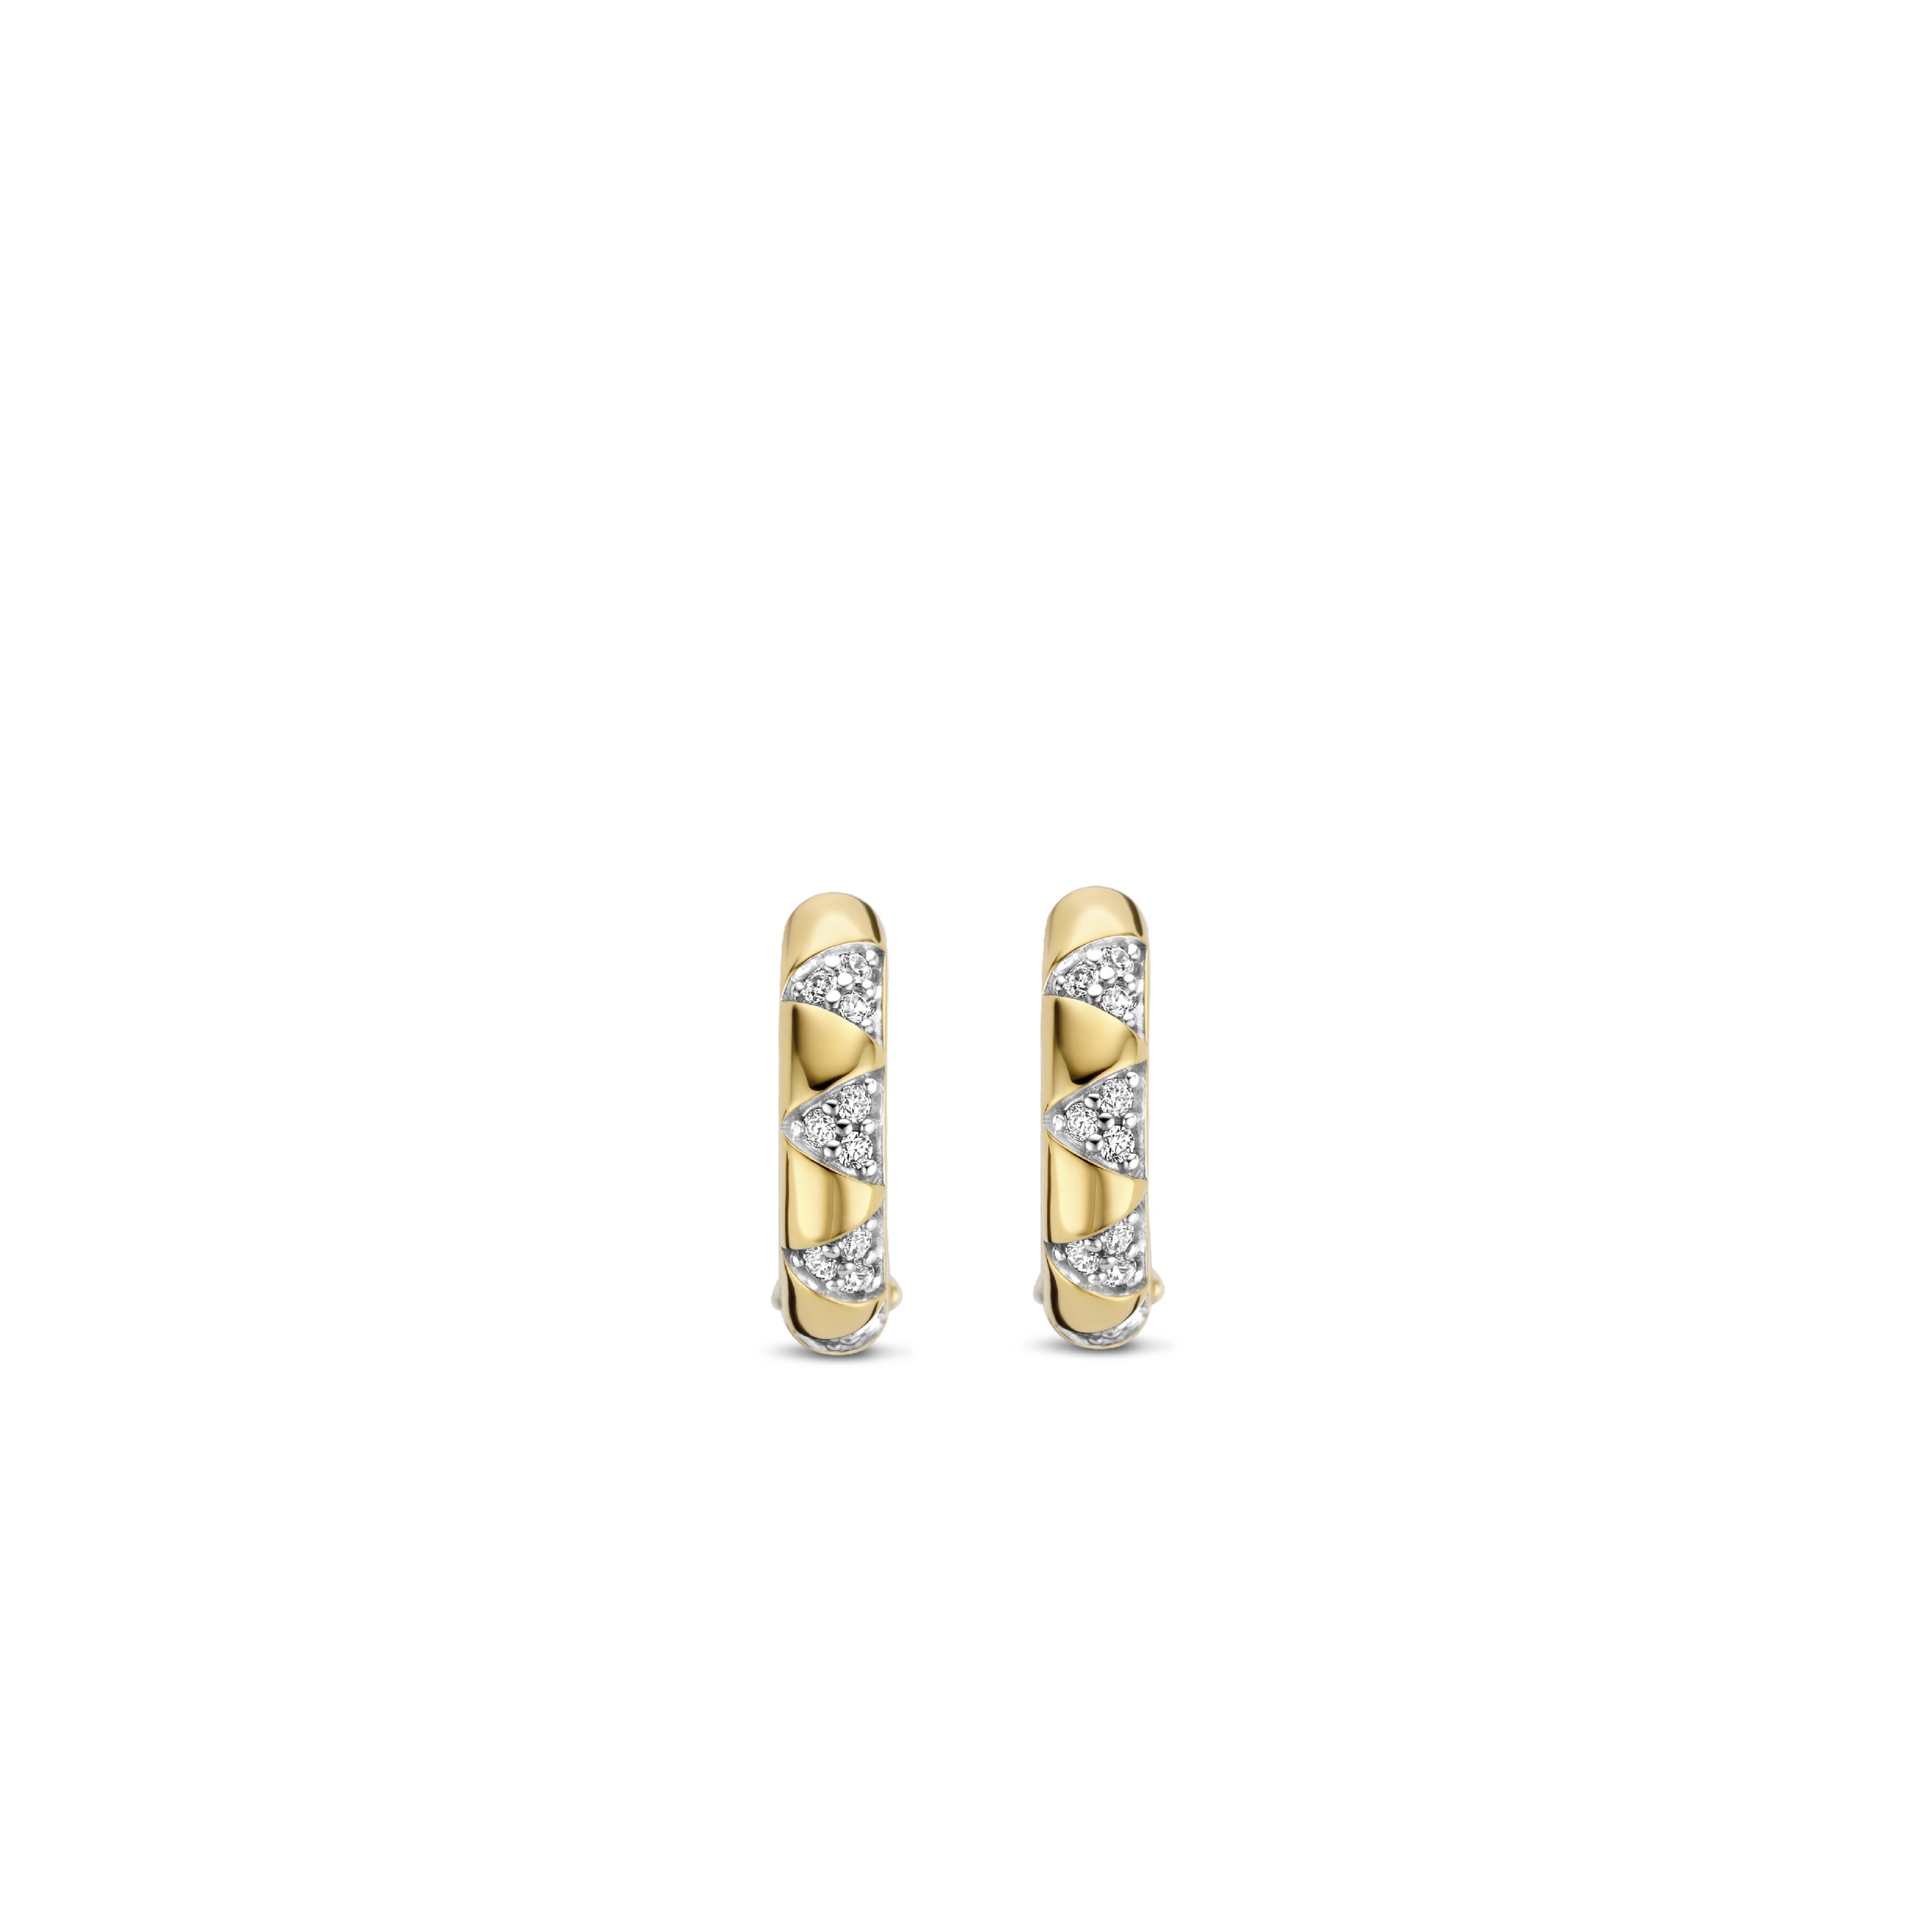 TI SENTO - Milano Earrings 7838ZY Image 3 Gala Jewelers Inc. White Oak, PA